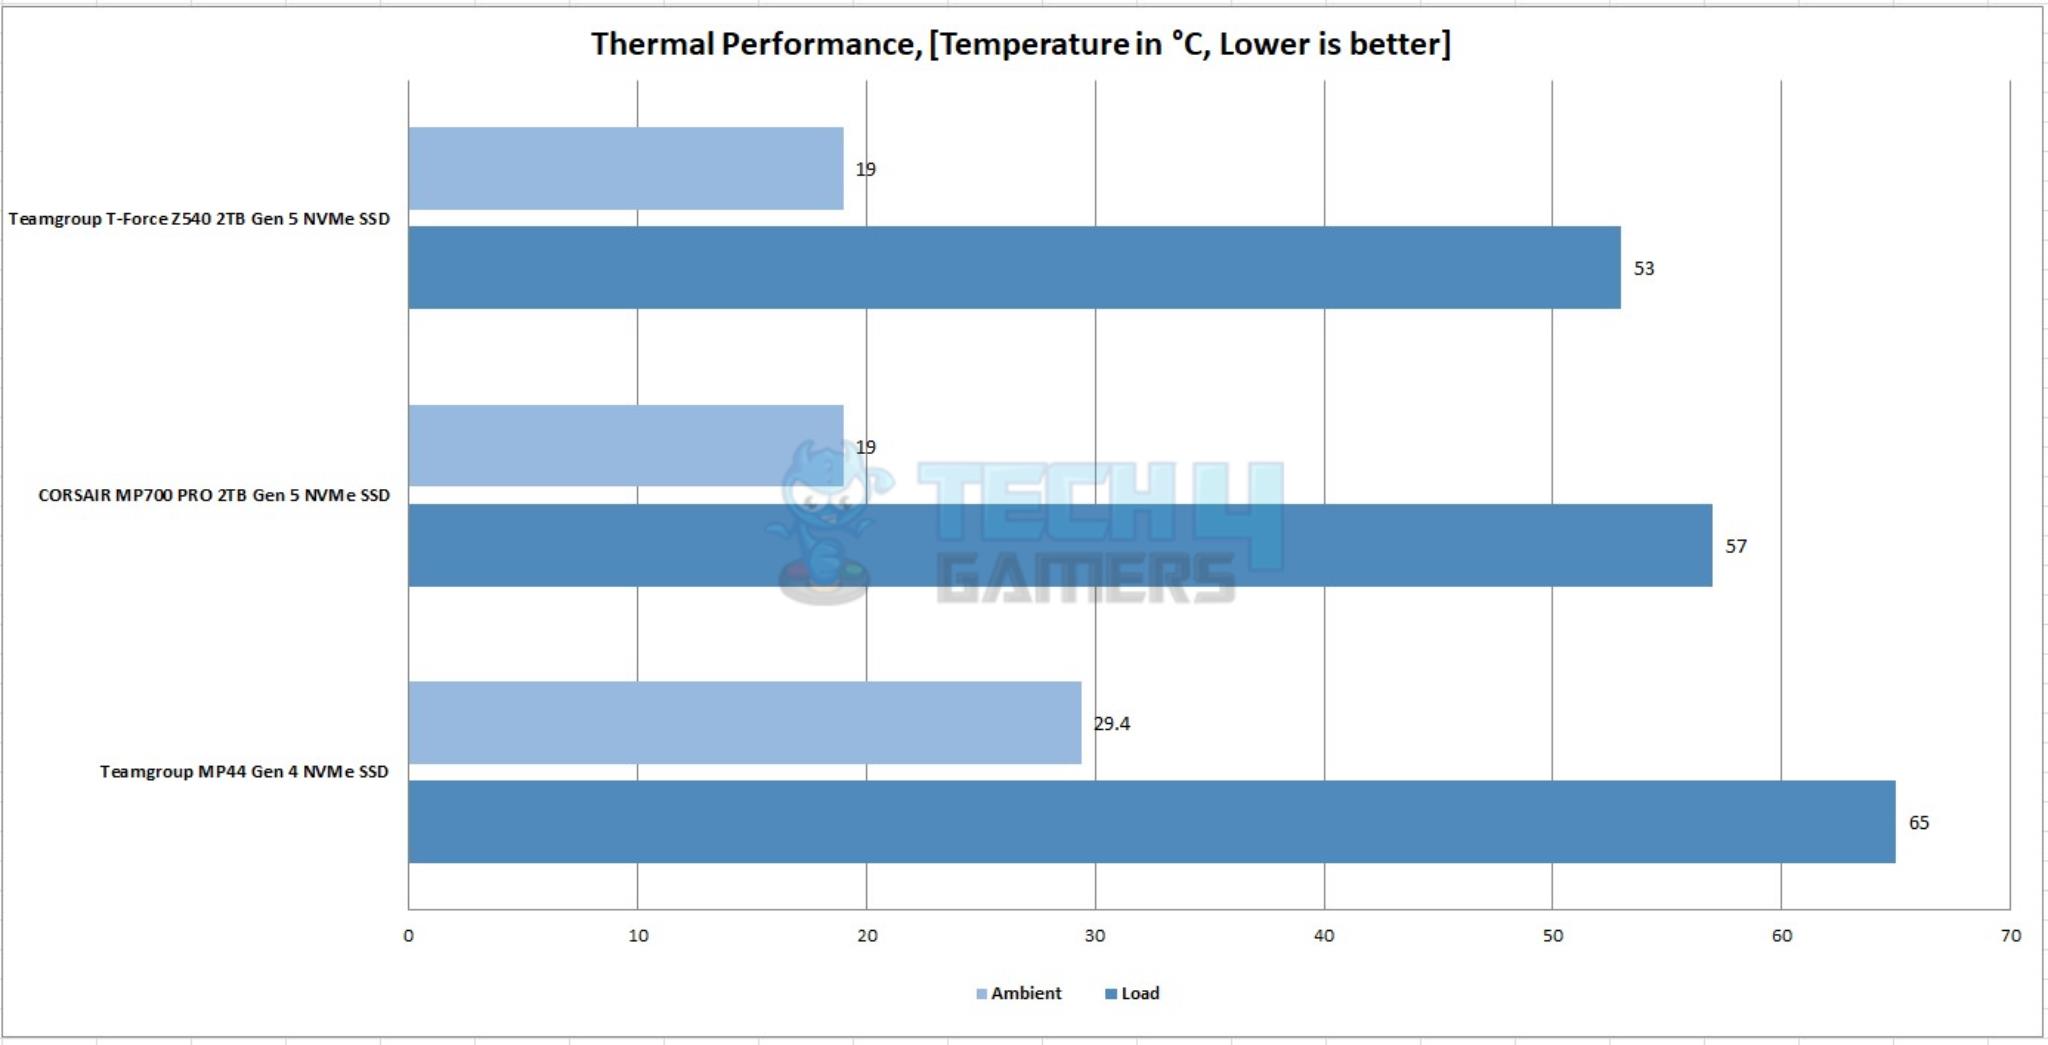 CORSAIR MP700 PRO 2TB Gen5 NVMe SSD — Thermal Performance